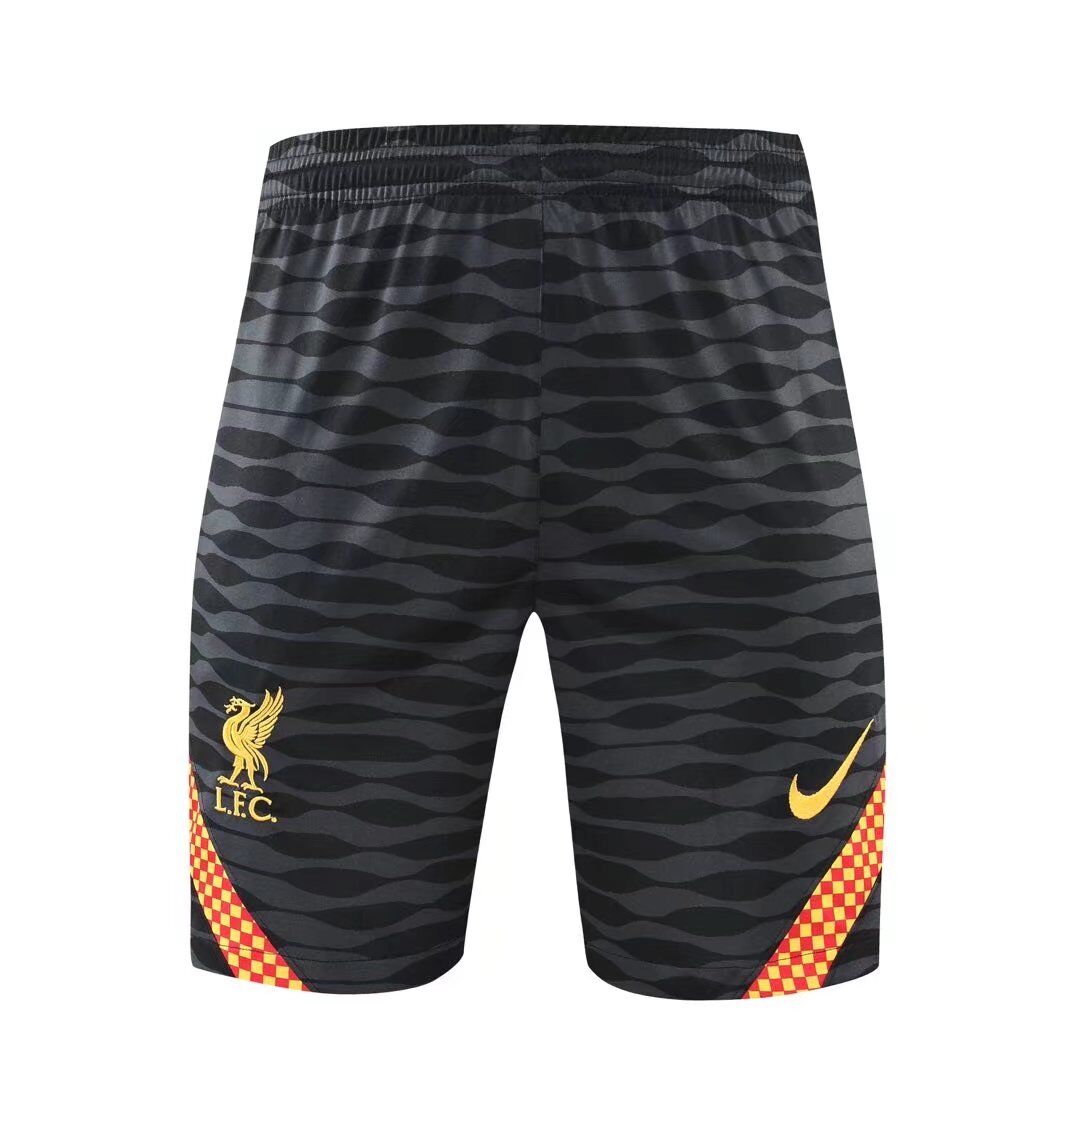 Liverpool Training Soccer Jersey Kit(Jersey+Shorts) Gray&Black 2021/22